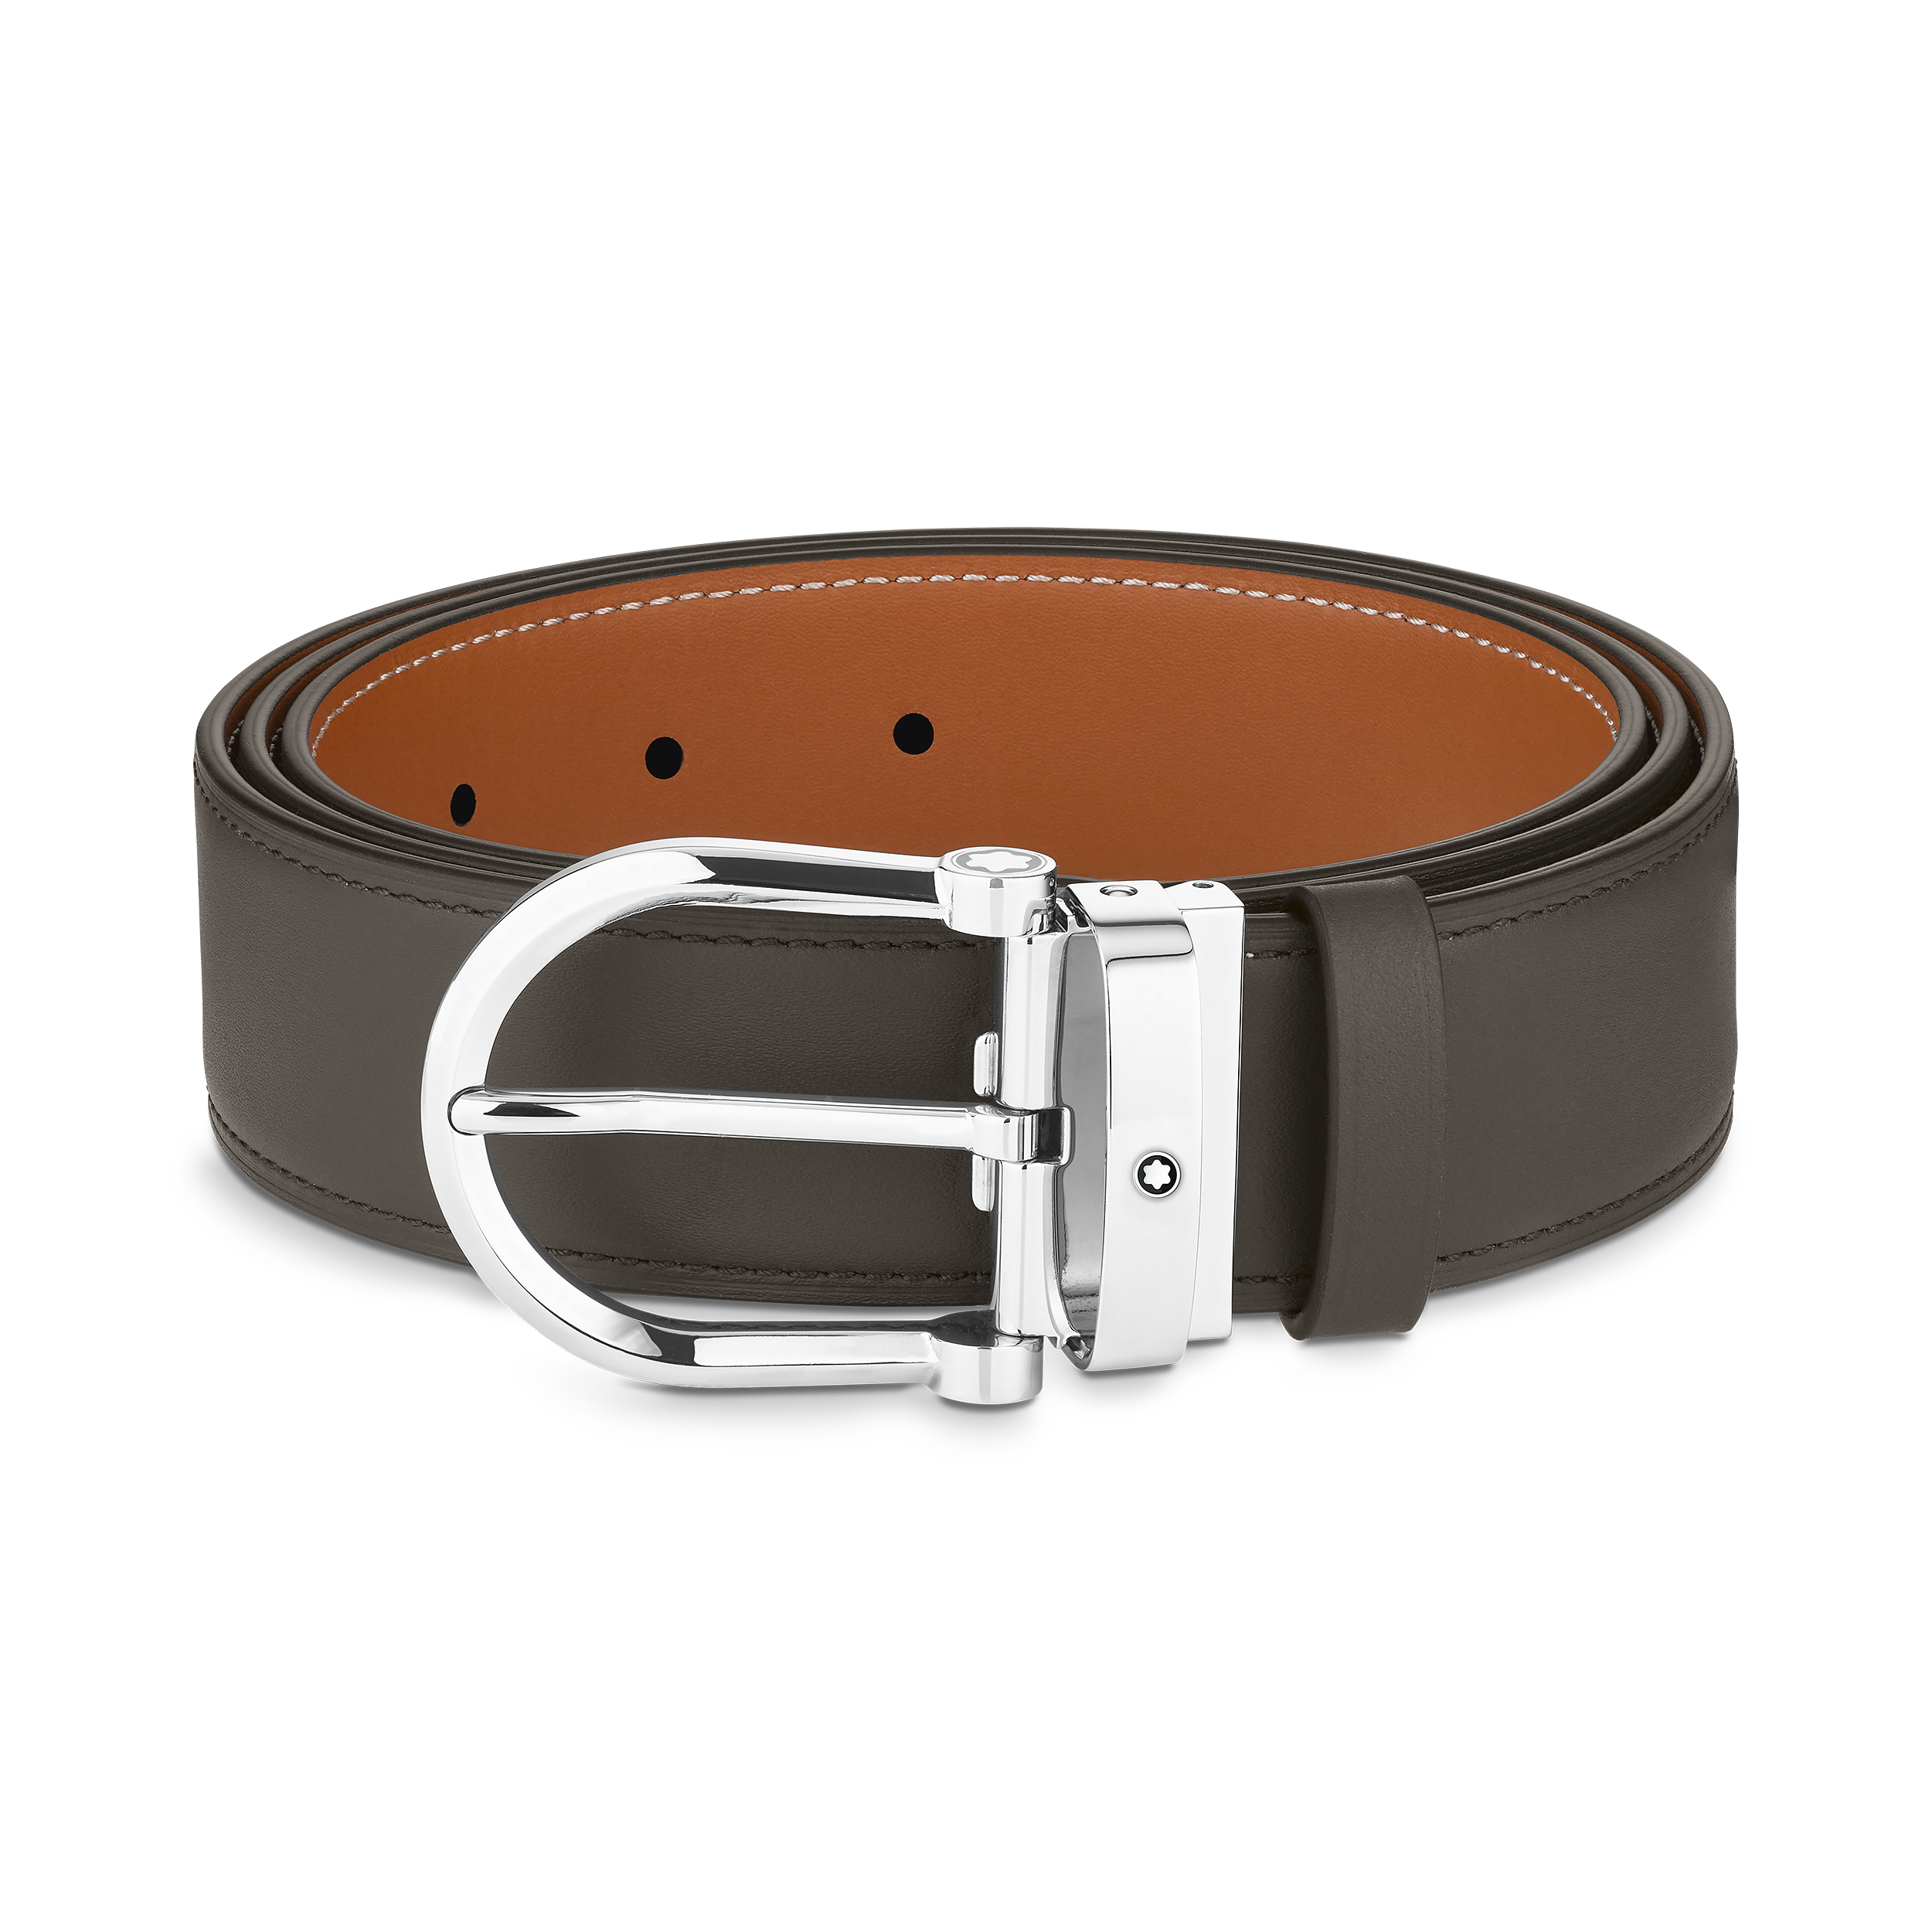 Horseshoe buckle smoke/tan colors 35 mm reversible leather belt